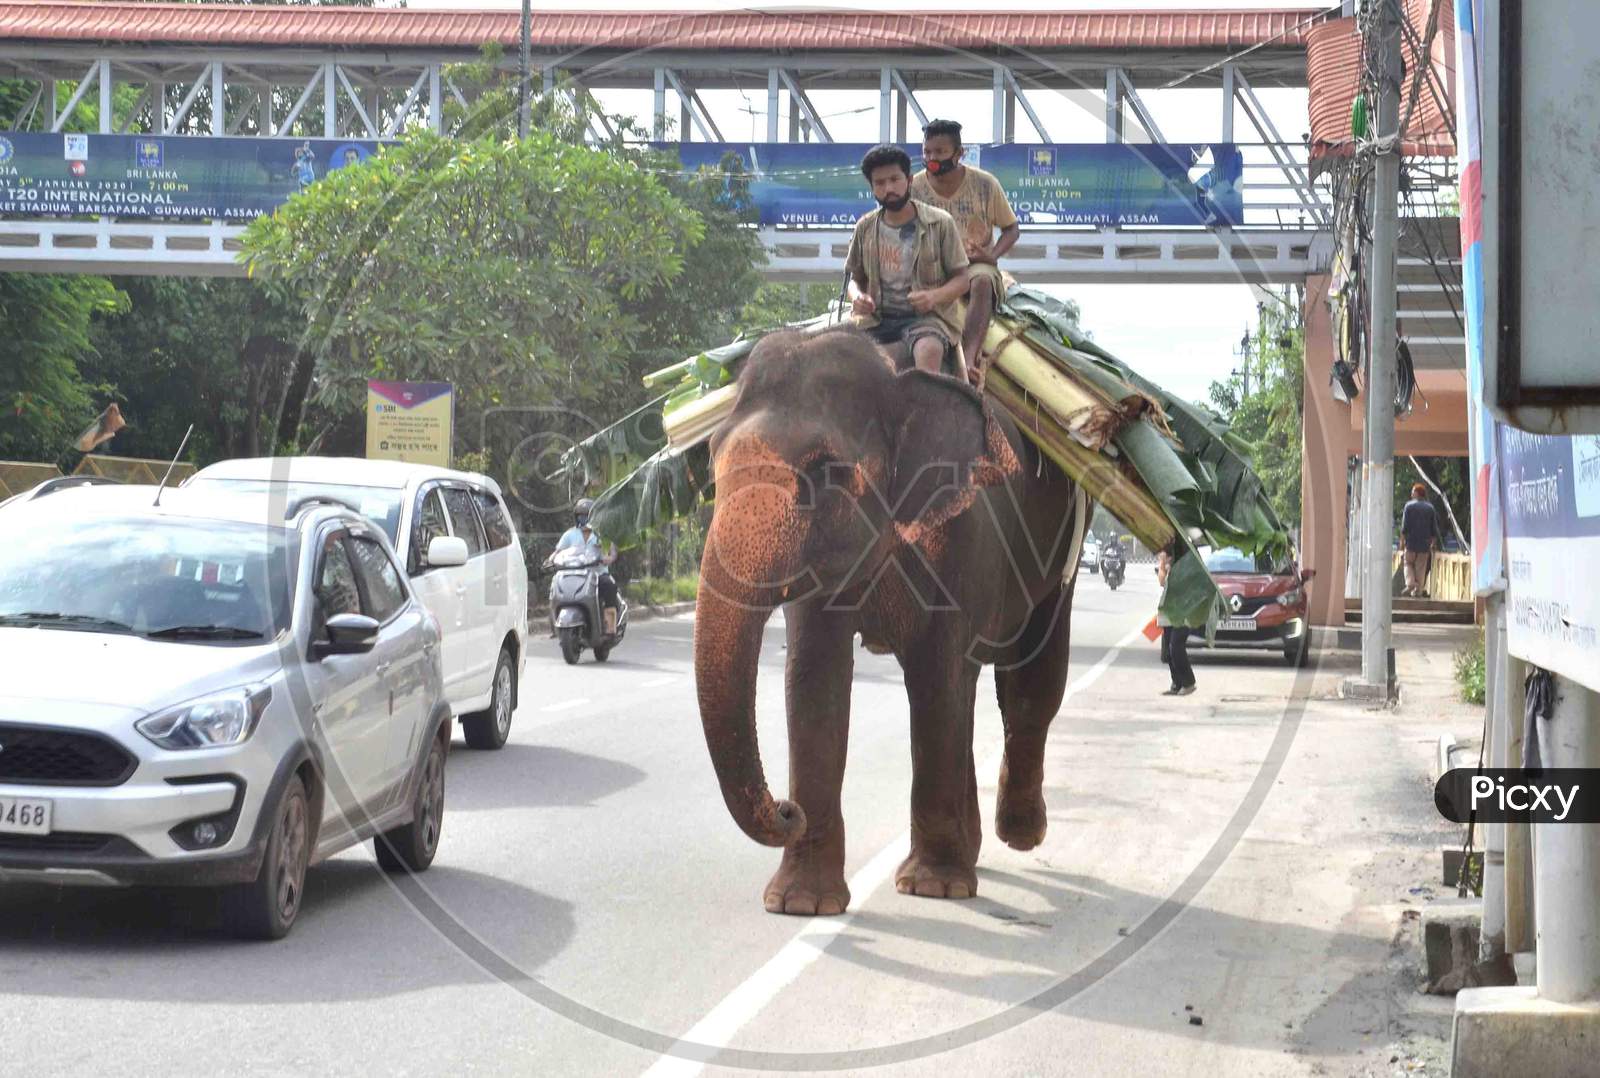 An Elephant carrying Banana tree